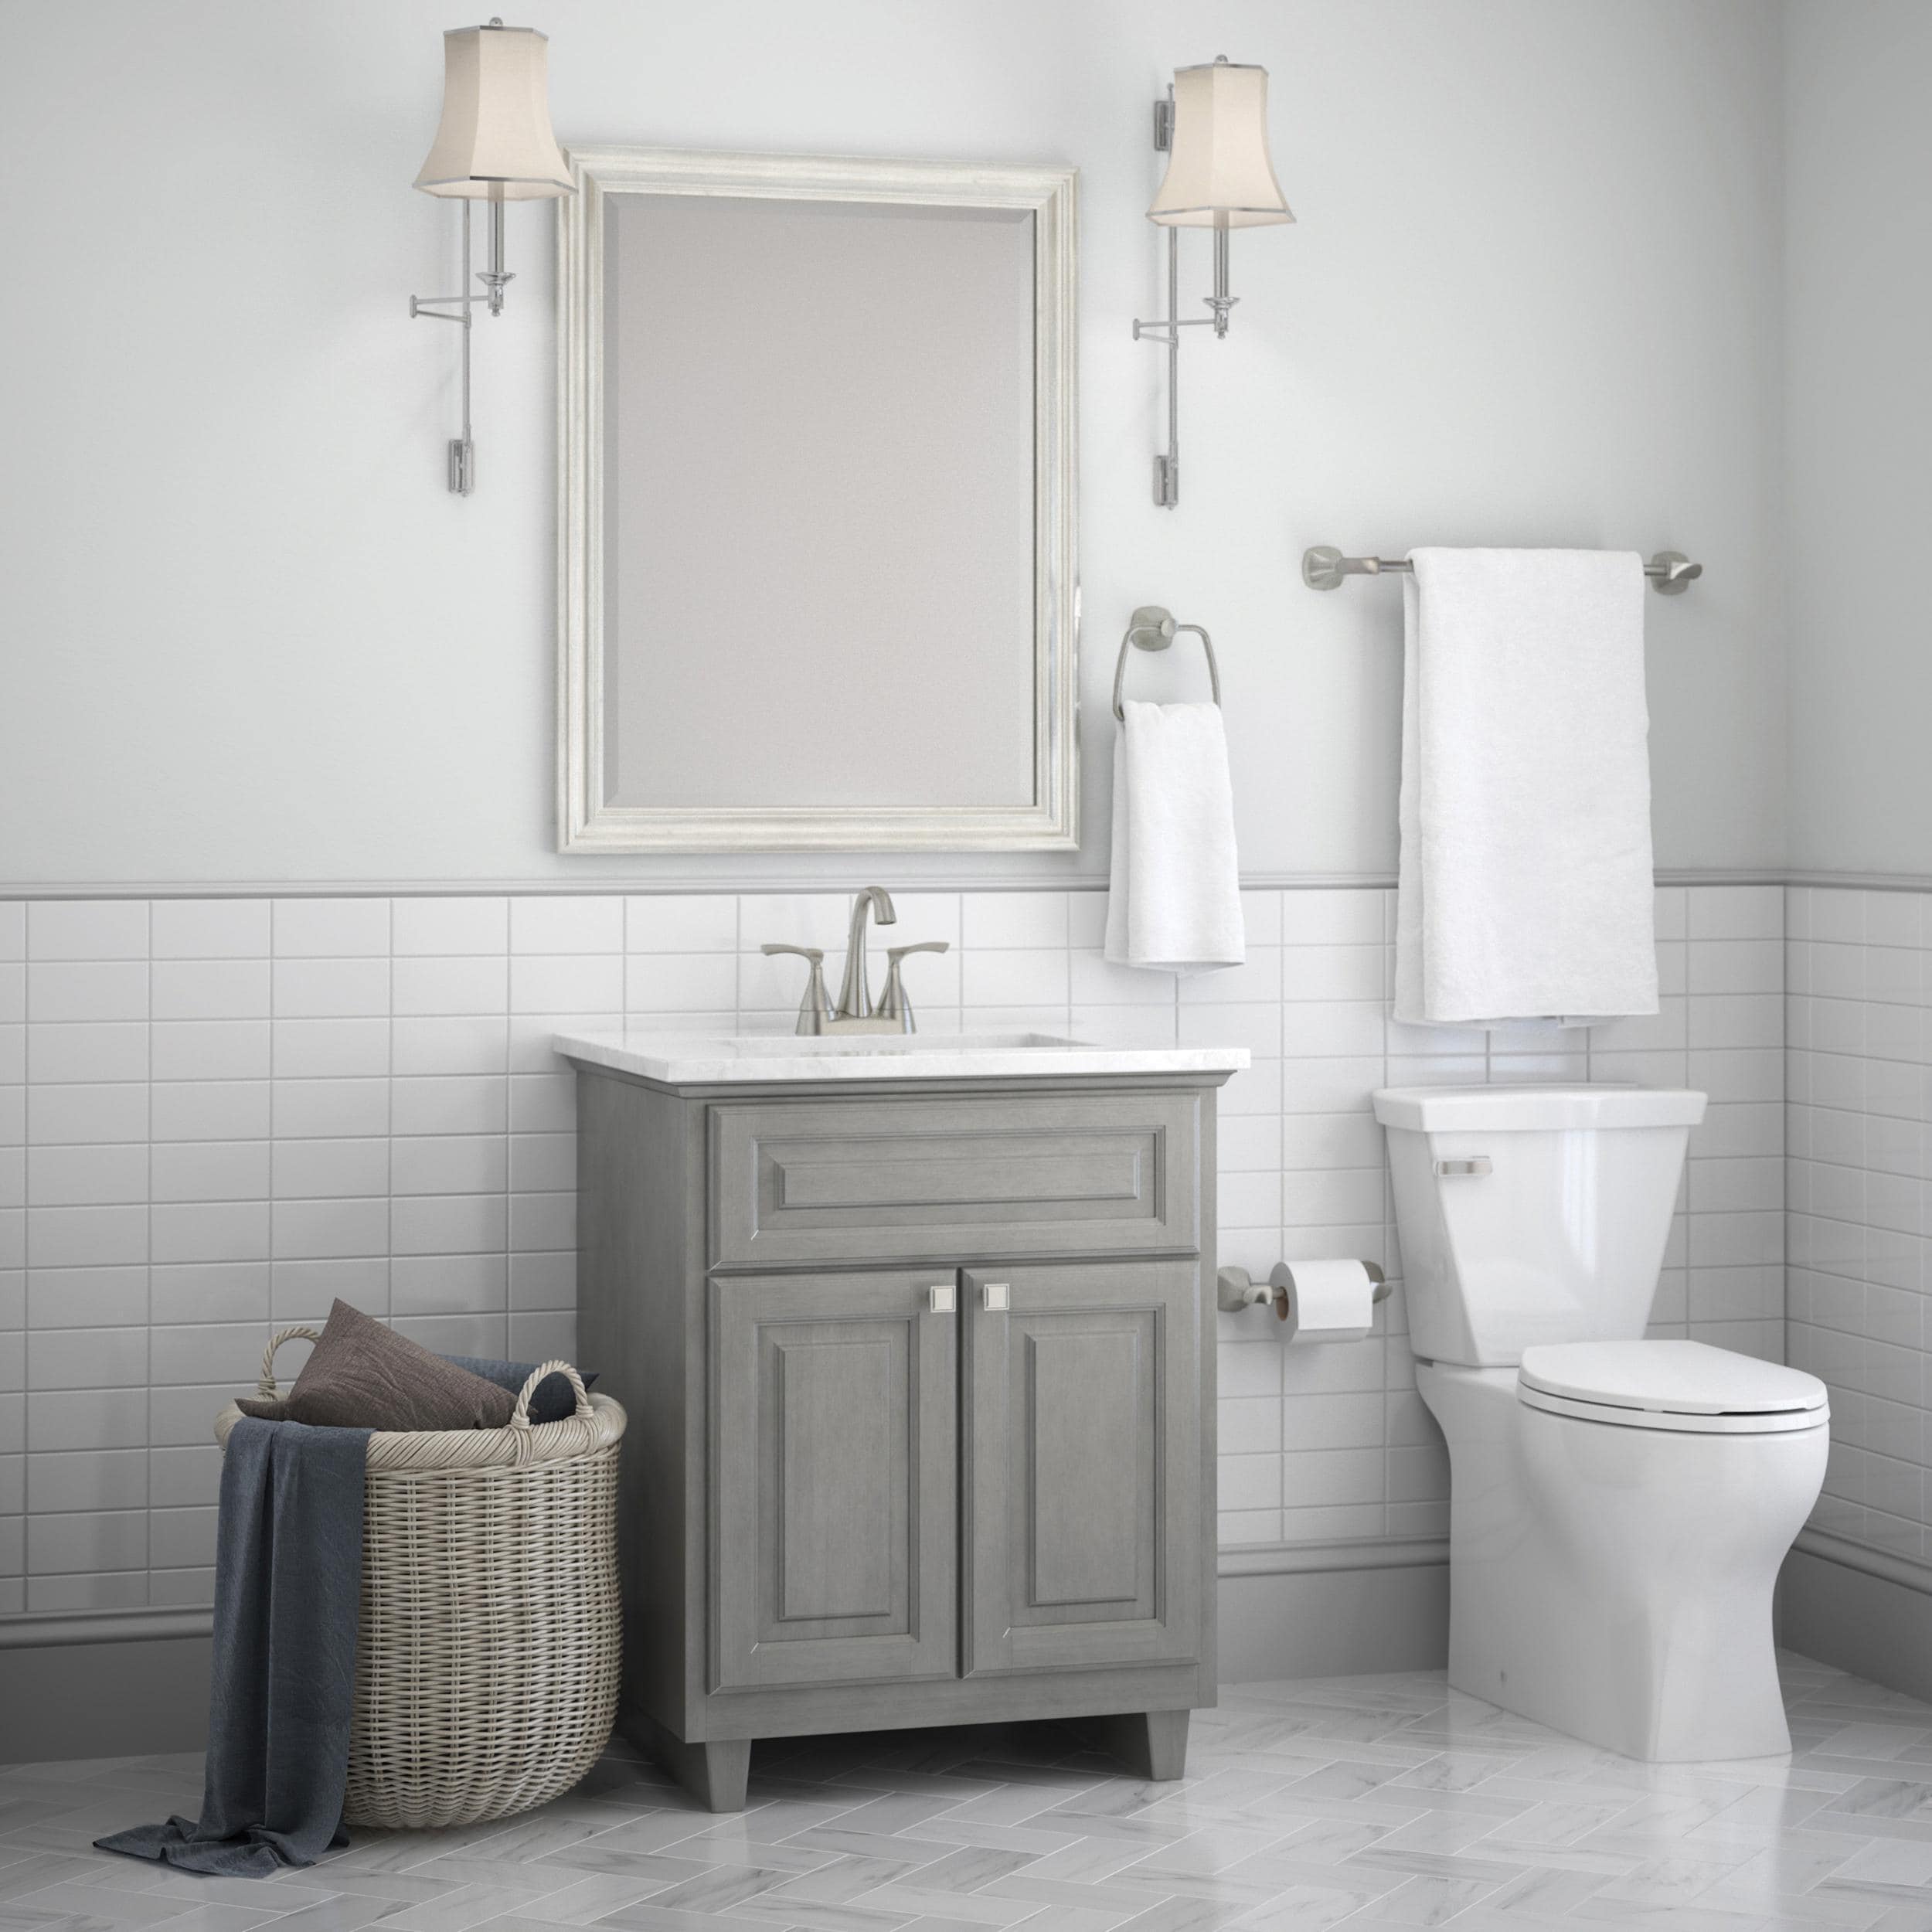 Gray Color Brass Square Bathroom Accessories Set Bath Hardware Towel Bar  szh106